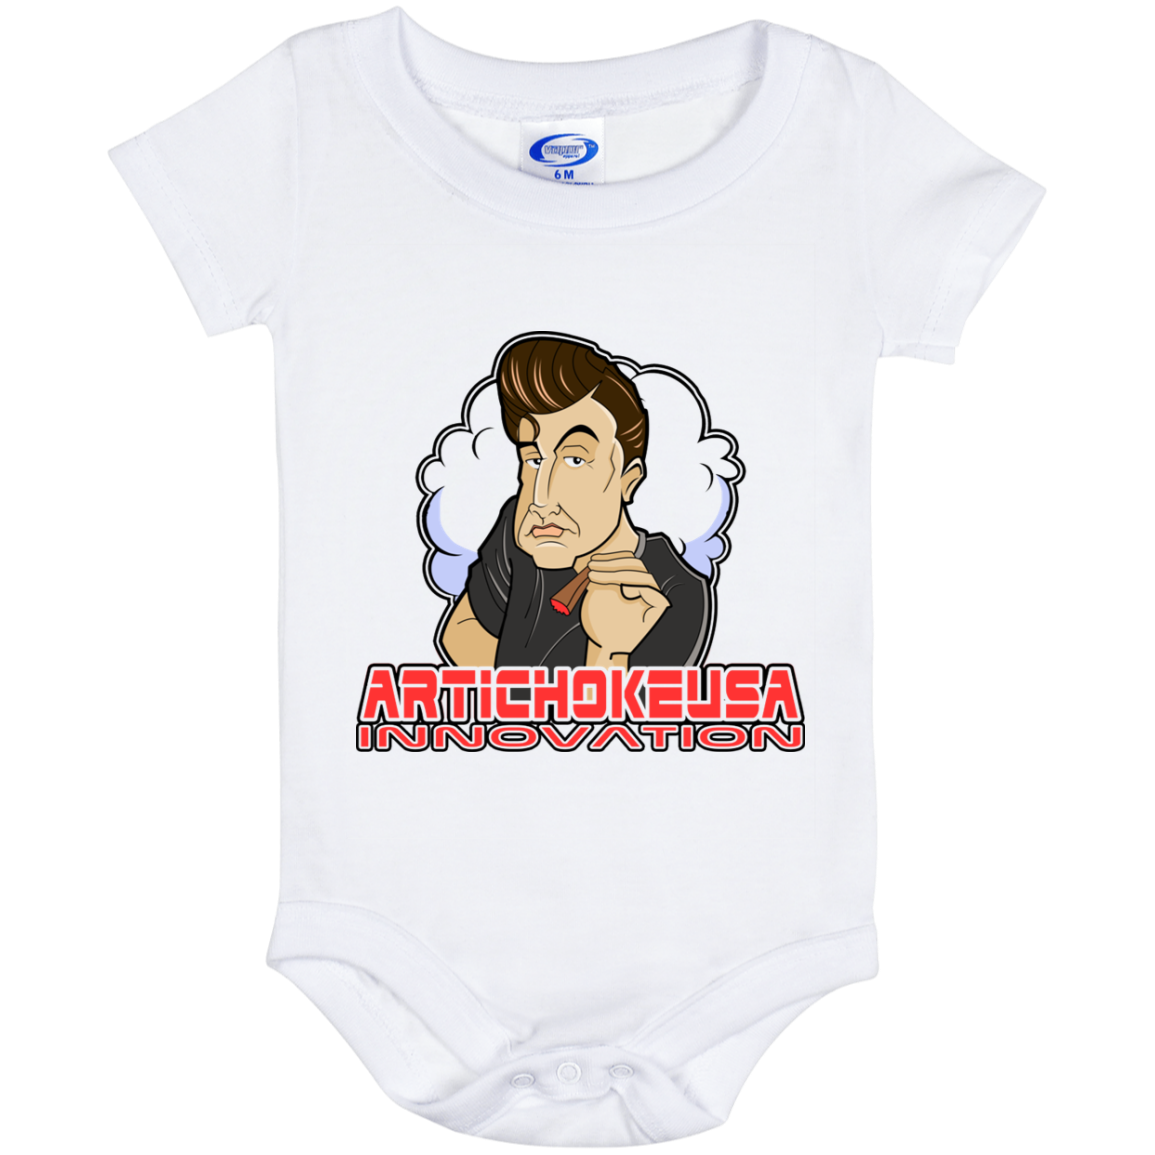 ArtichokeUSA Custom Design. Innovation. Elon Musk Parody Fan Art. Baby Onesie 6 Month